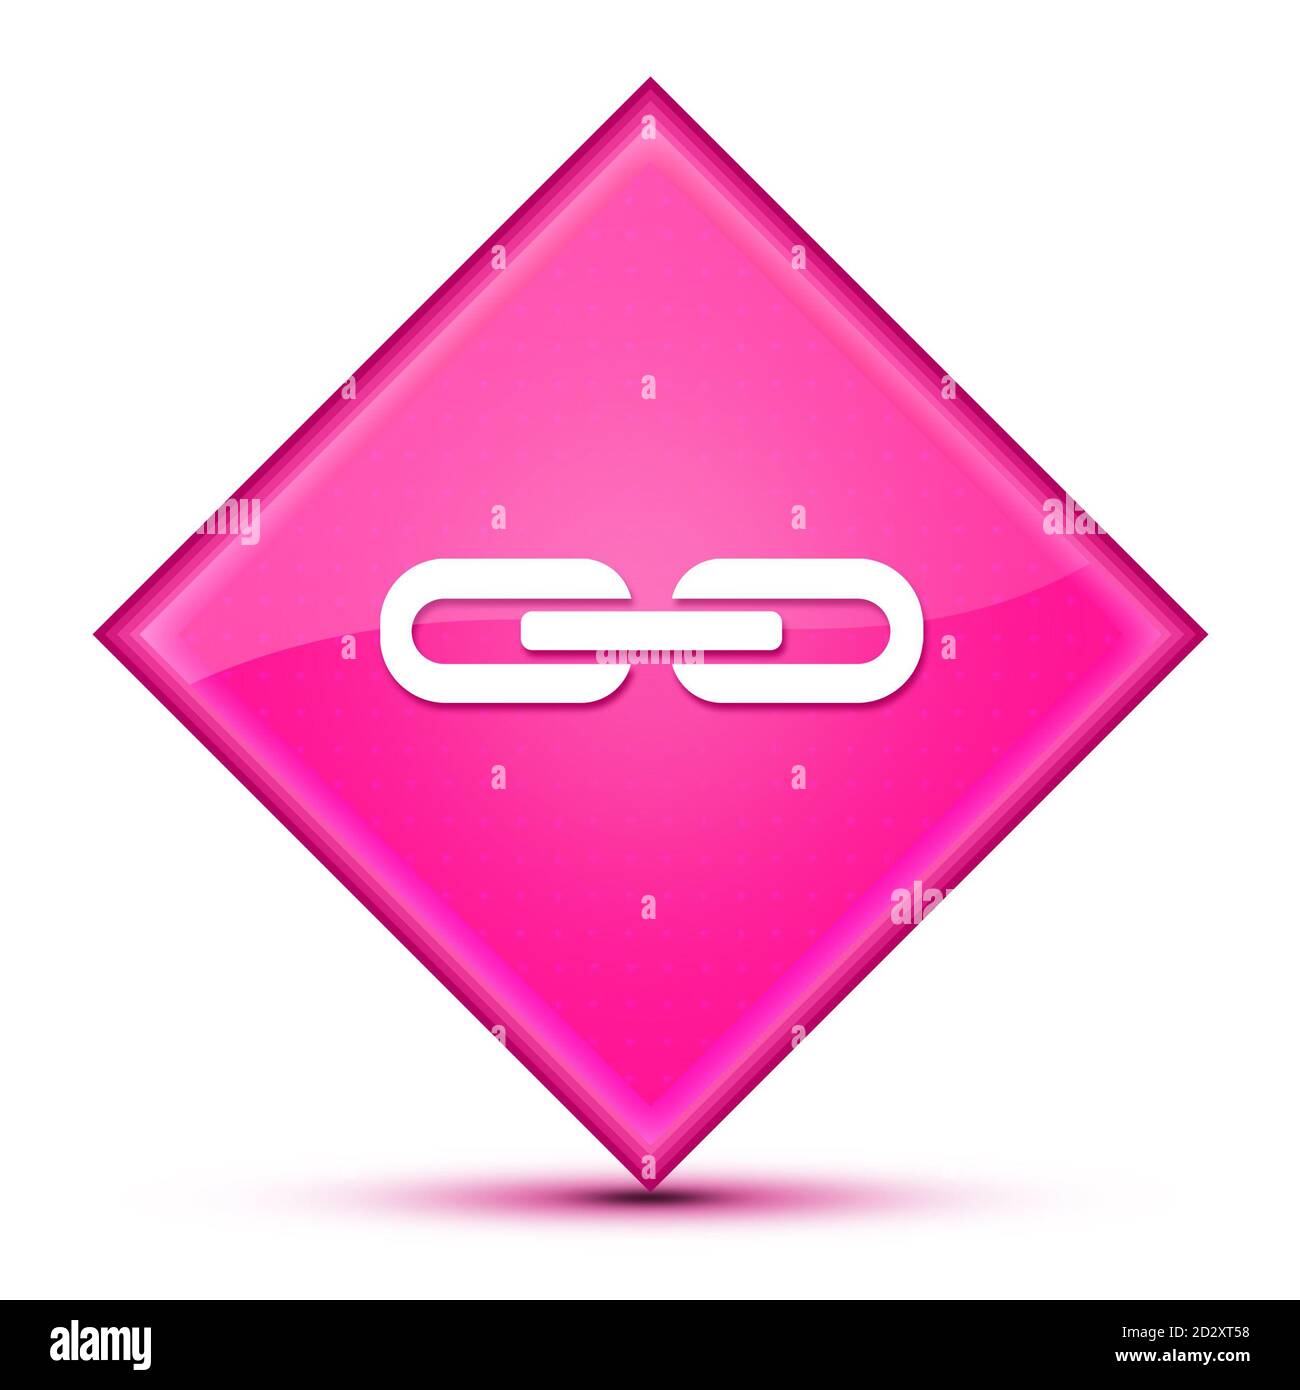 Link icon isolated on luxurious wavy pink diamond button abstract illustration Stock Photo